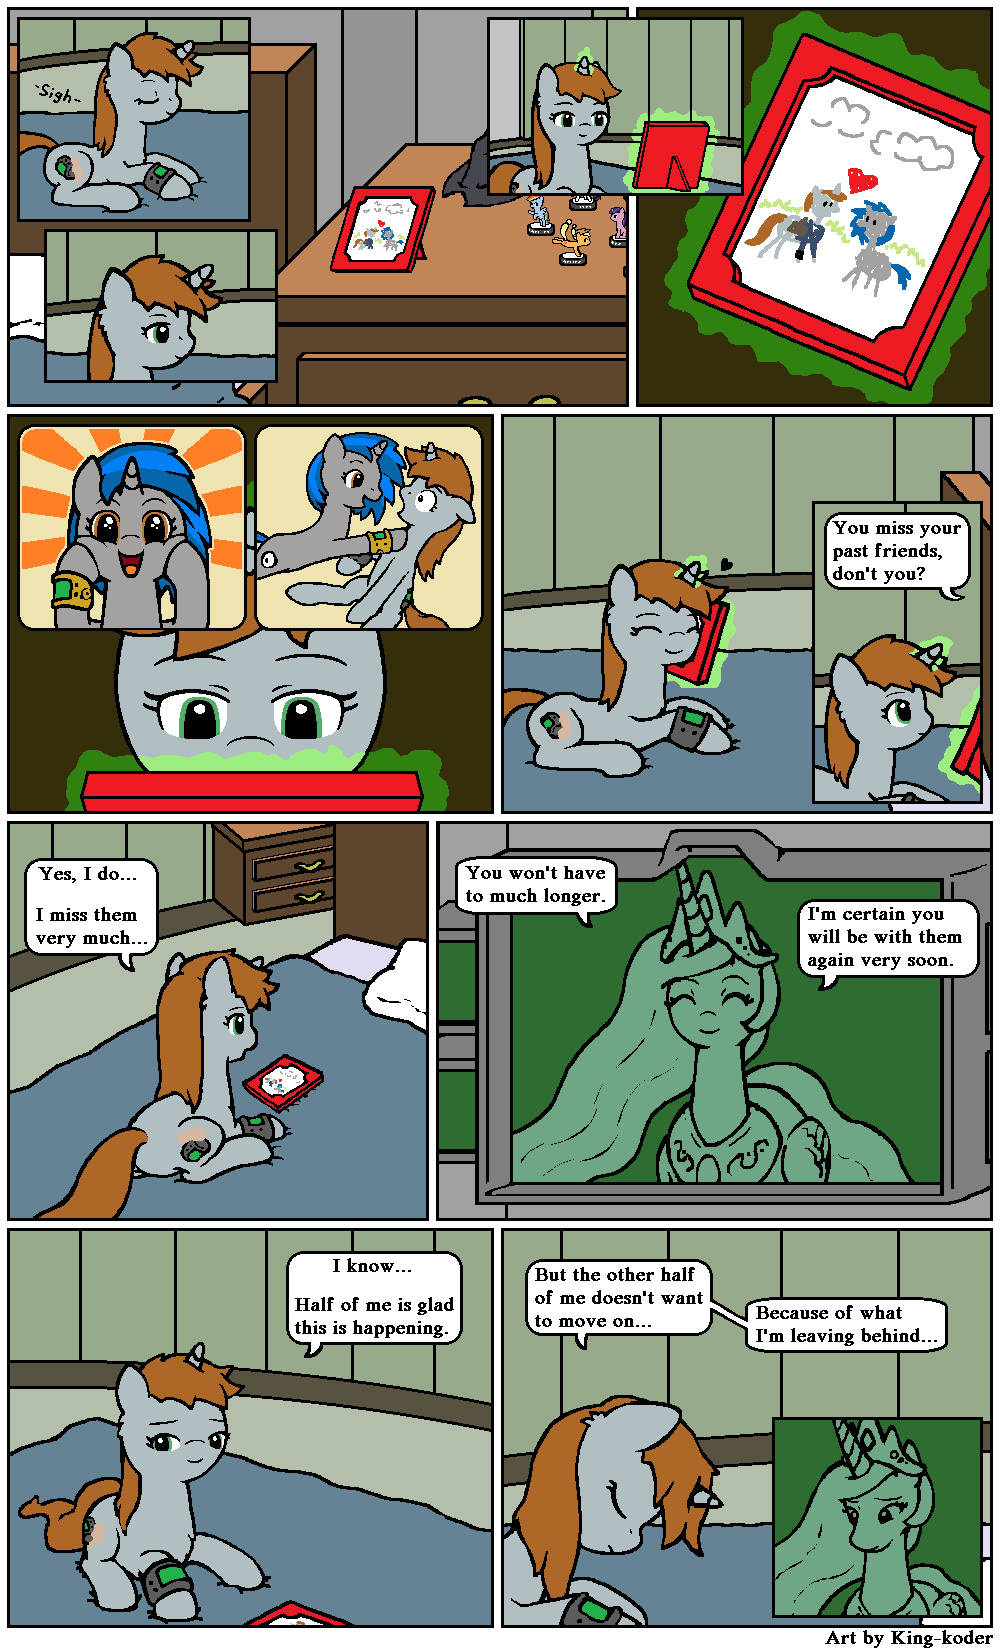 Post-Fallout Equestria : Episode1 Page9